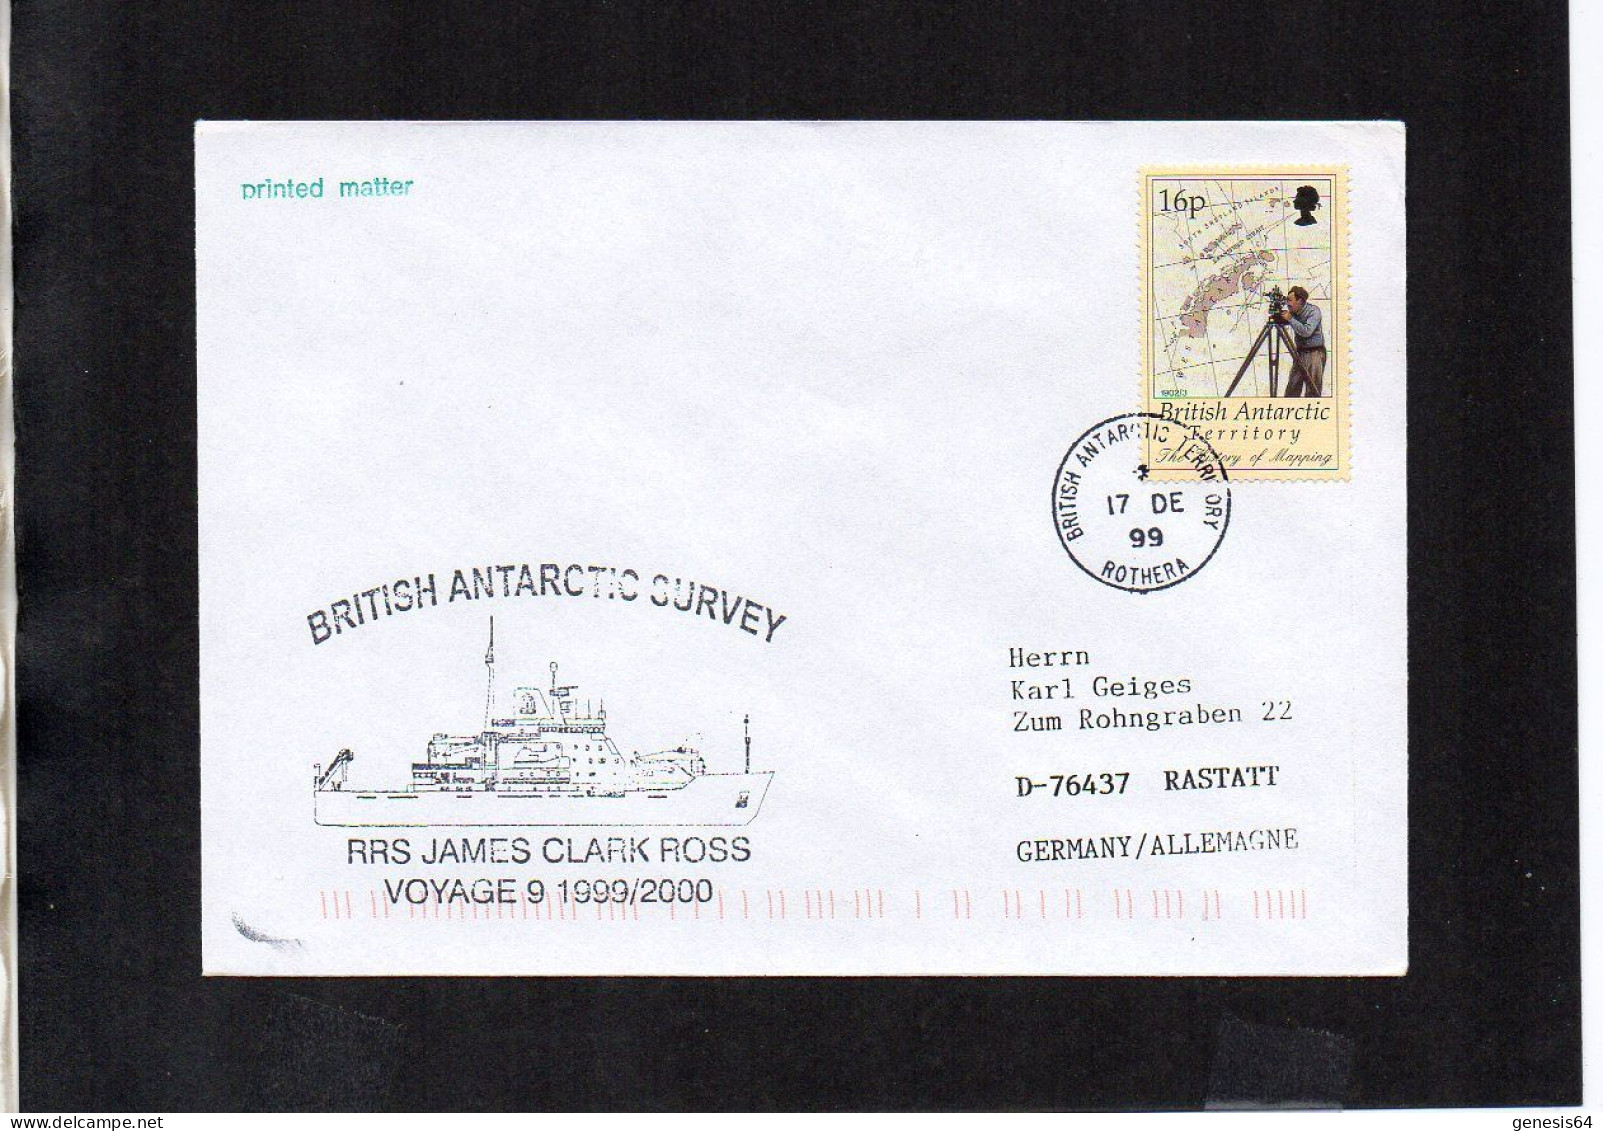 British Antarctic Territory (BAT) 1999 Cover Ship RRS James Clark Ross - Rothera 17 DE 1999 - (1ATK004) - Covers & Documents